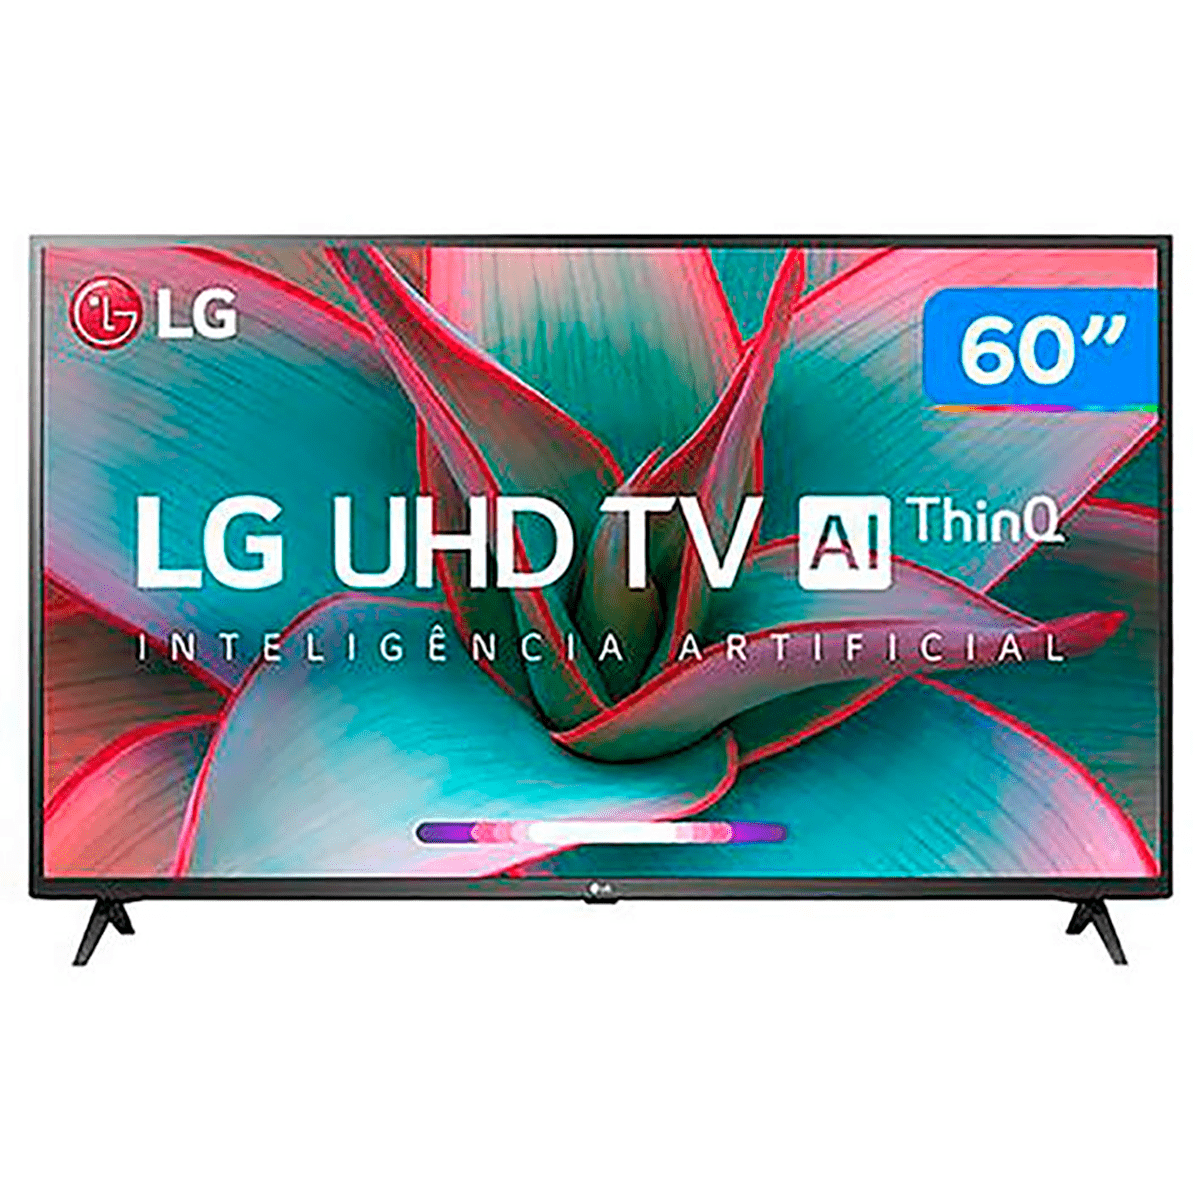 Smart Tv LG 60 Led UHD 4k 60UN7310PSA Wi-Fi, Bluetooth, HDR